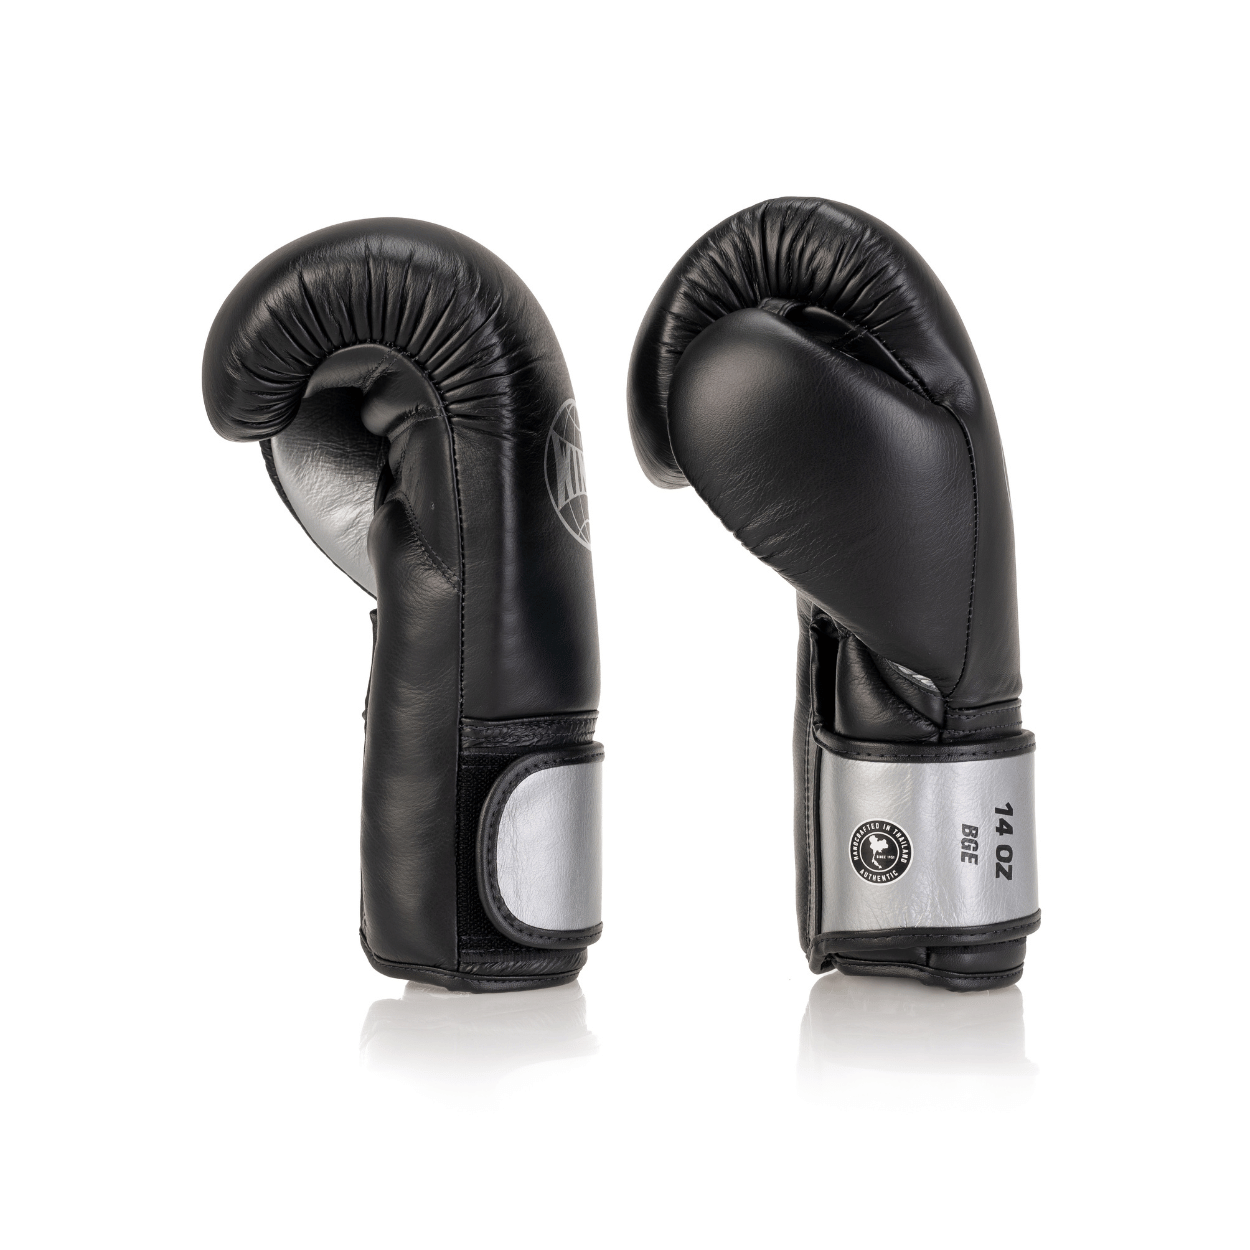 Elite Series Velcro Boxing Glove - Black/Silver - Windy Fight Gear B.V.